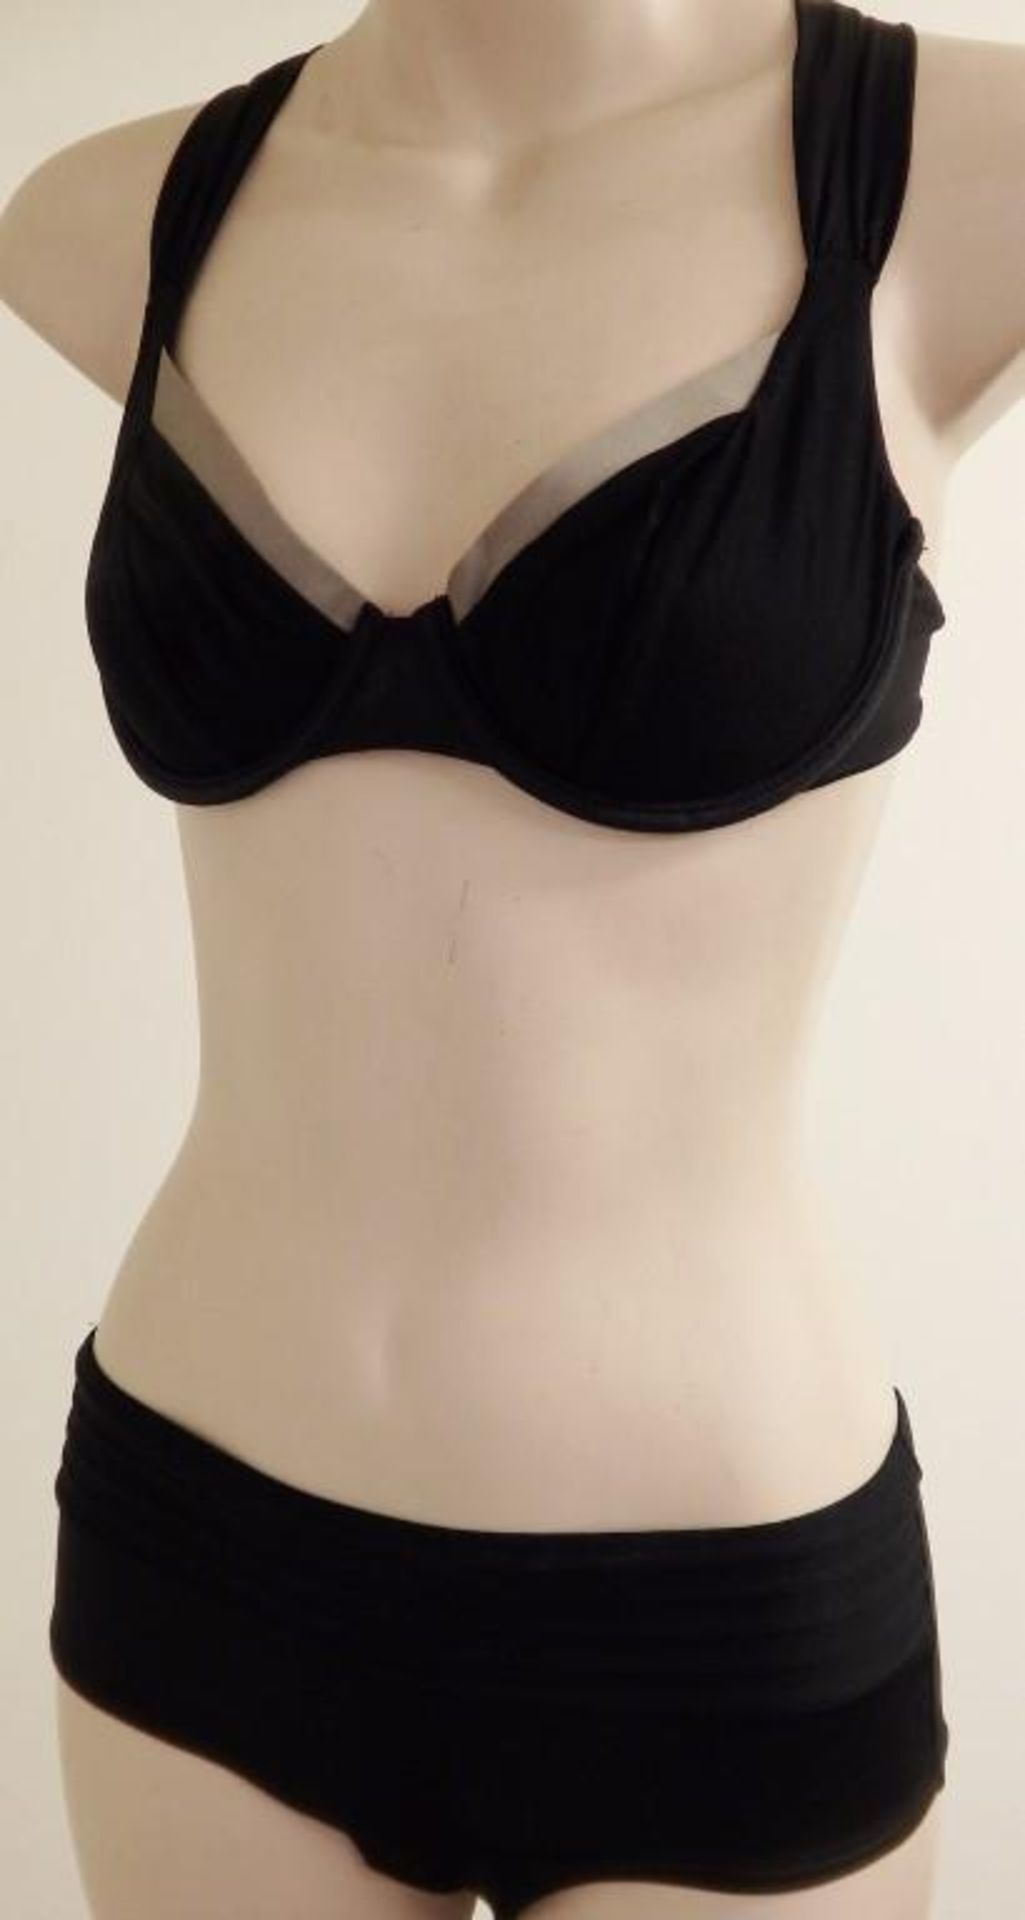 1 x Rasurel - Black and Gold Bikini - R20255 Touquet -Shorty - Size 2C - UK 32 - Fr 85 - EU/Int 70 -